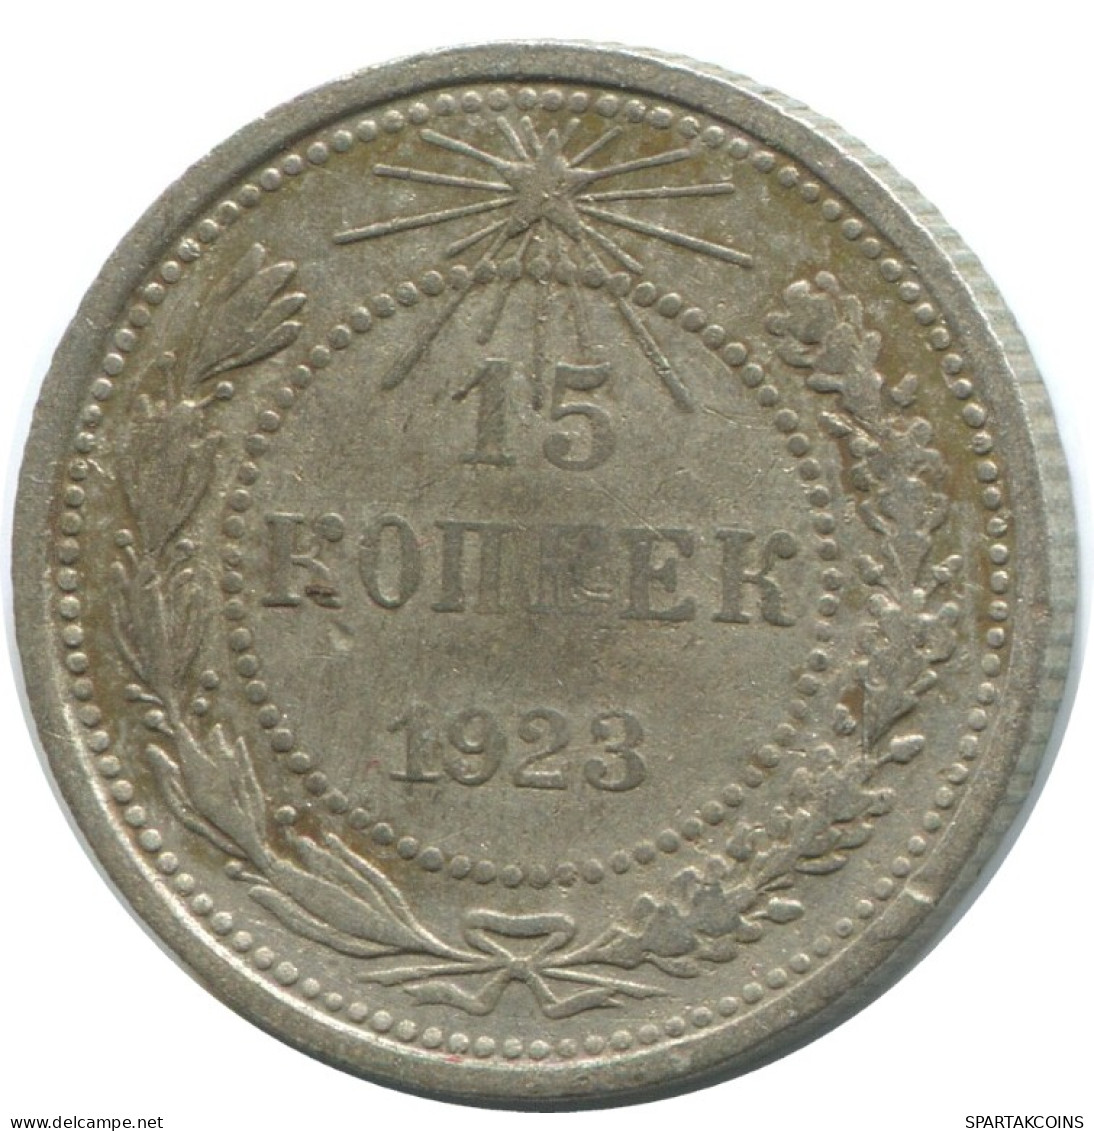 15 KOPEKS 1923 RUSSIA RSFSR SILVER Coin HIGH GRADE #AF098.4.U.A - Russia